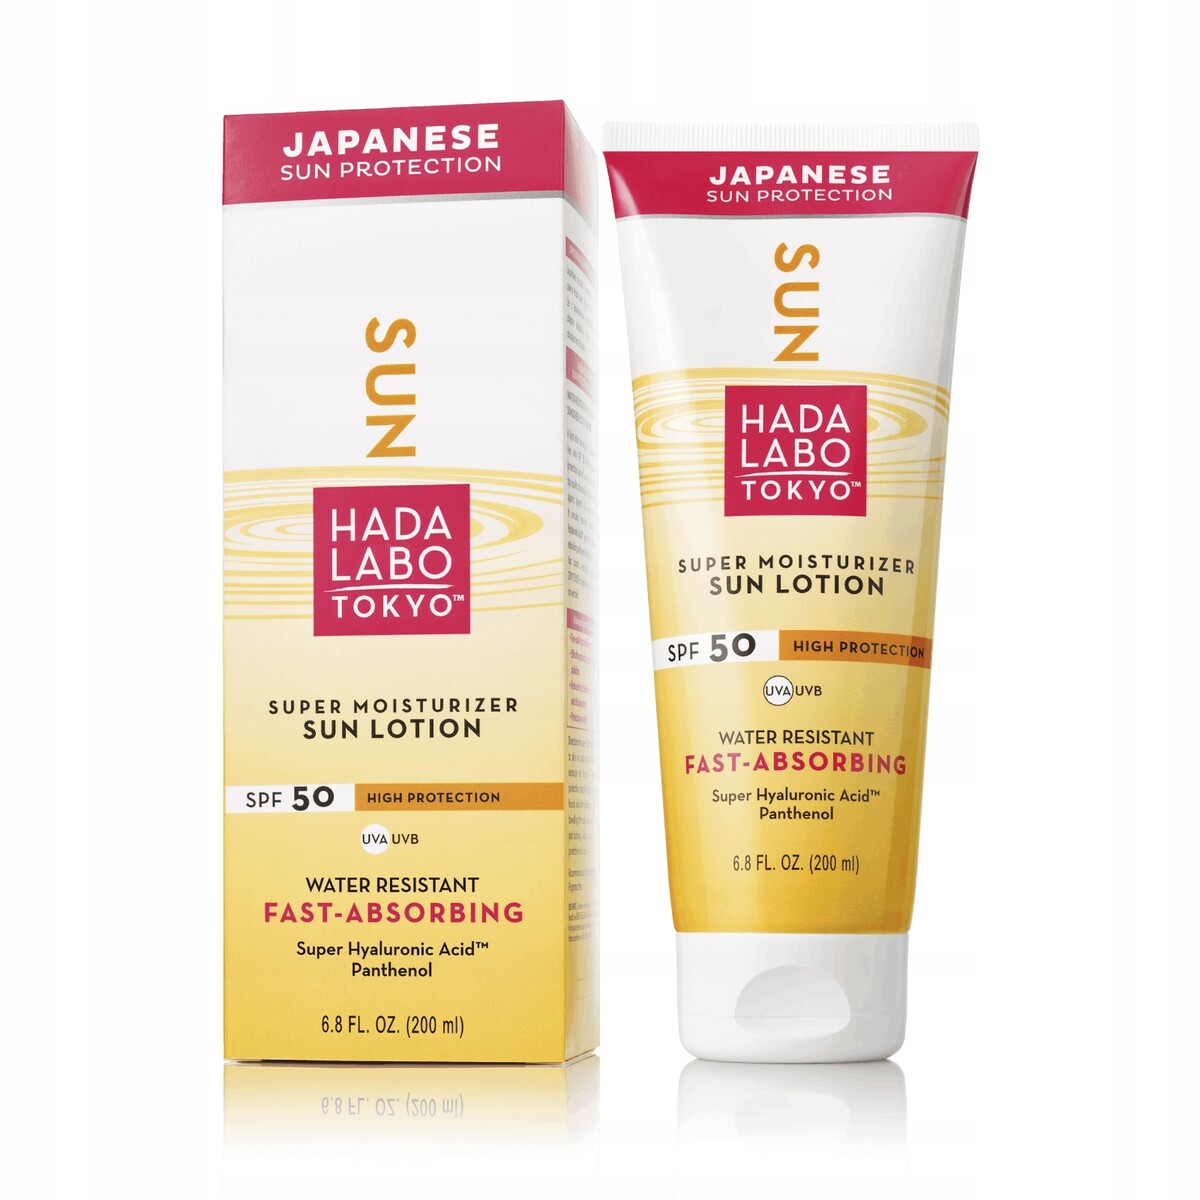 hada labo tokyo super moisturizer sun lotion spf 50